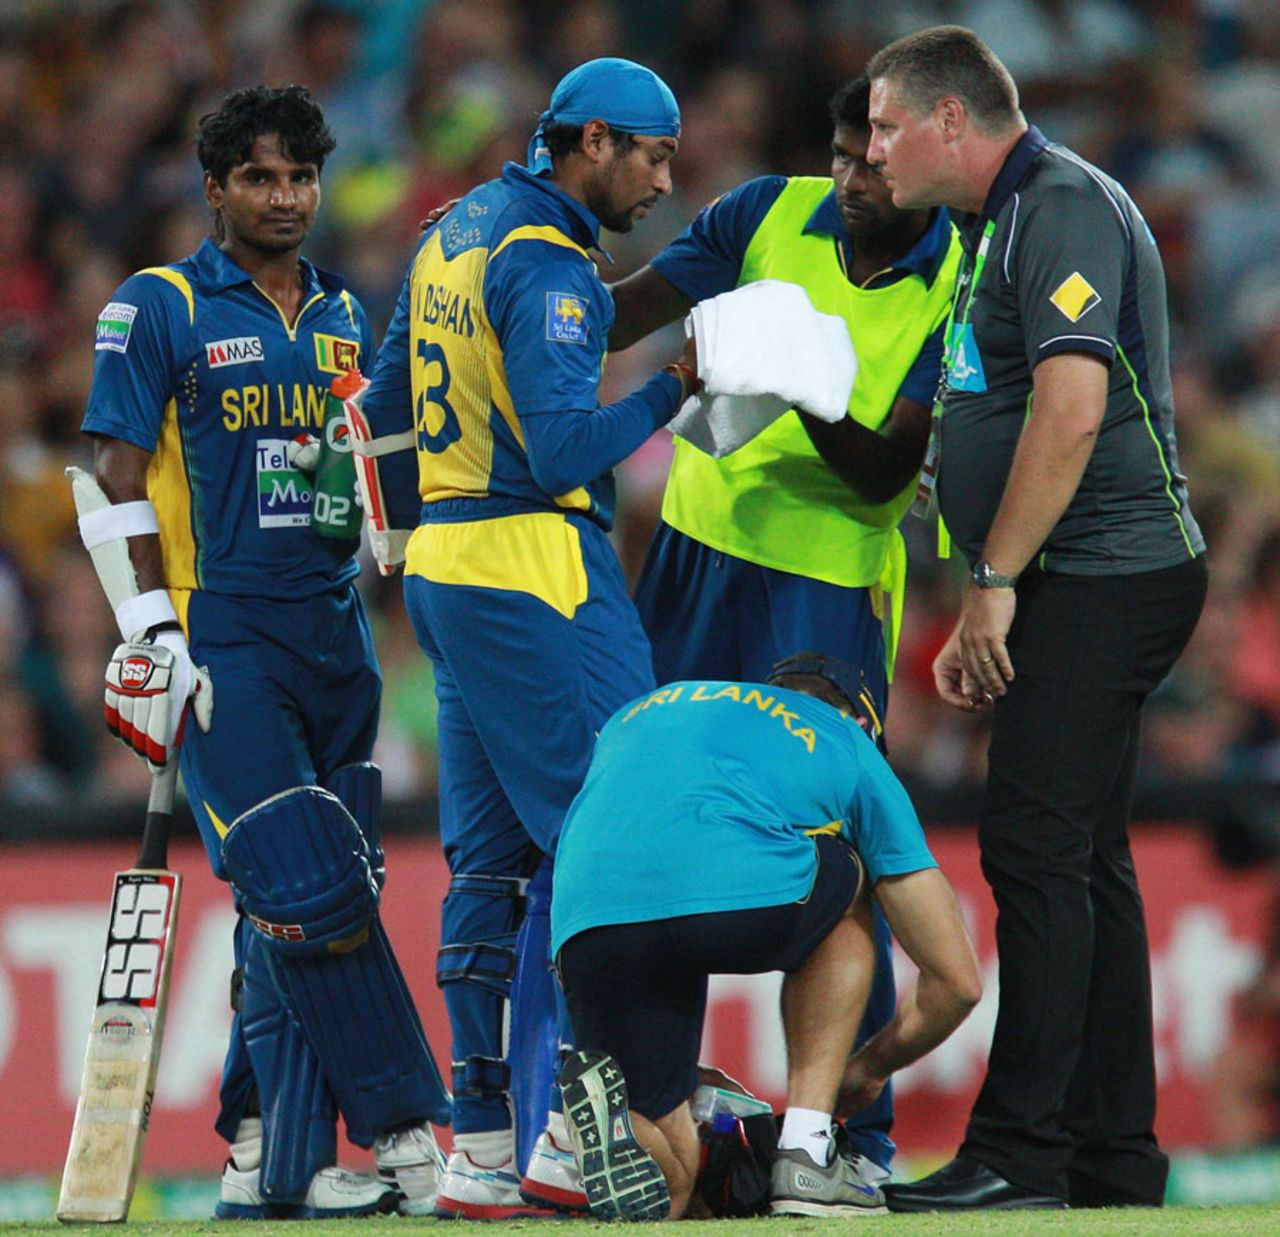 Tillakaratne Dilshan sustained a cut but was able to continue, Australia v Sri Lanka, 1st T20, Sydney, January 26, 2013